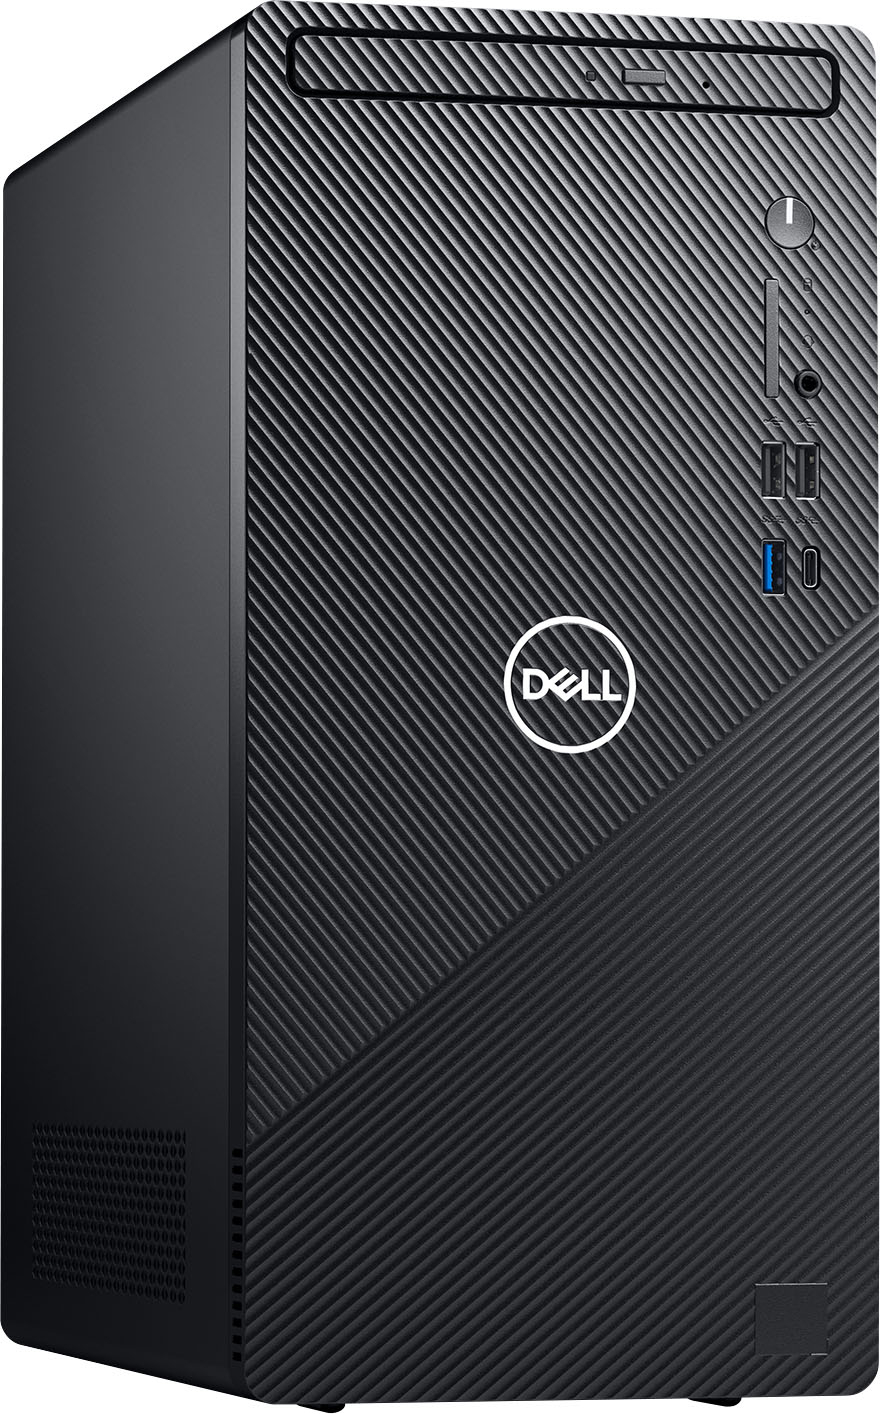 Angle View: Dell - Inspiron Desktop - Intel Core i3 - 8GB Memory - 1TB HDD - Black